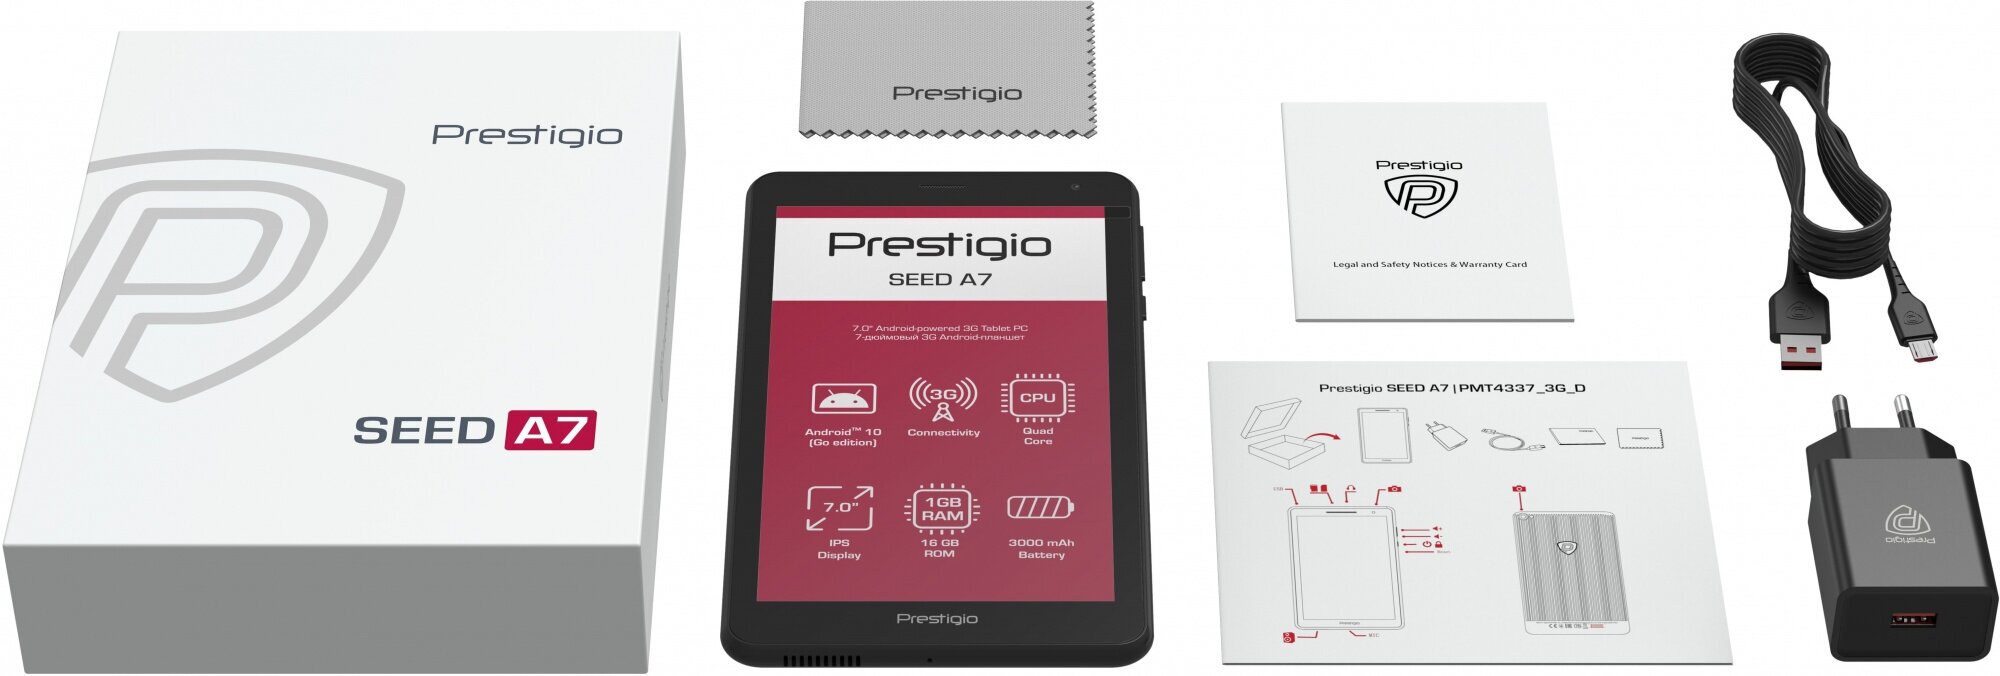 Планшет PRESTIGIO Seed A7 1GB 16GB черный (PMT4337_3G_D_CIS)